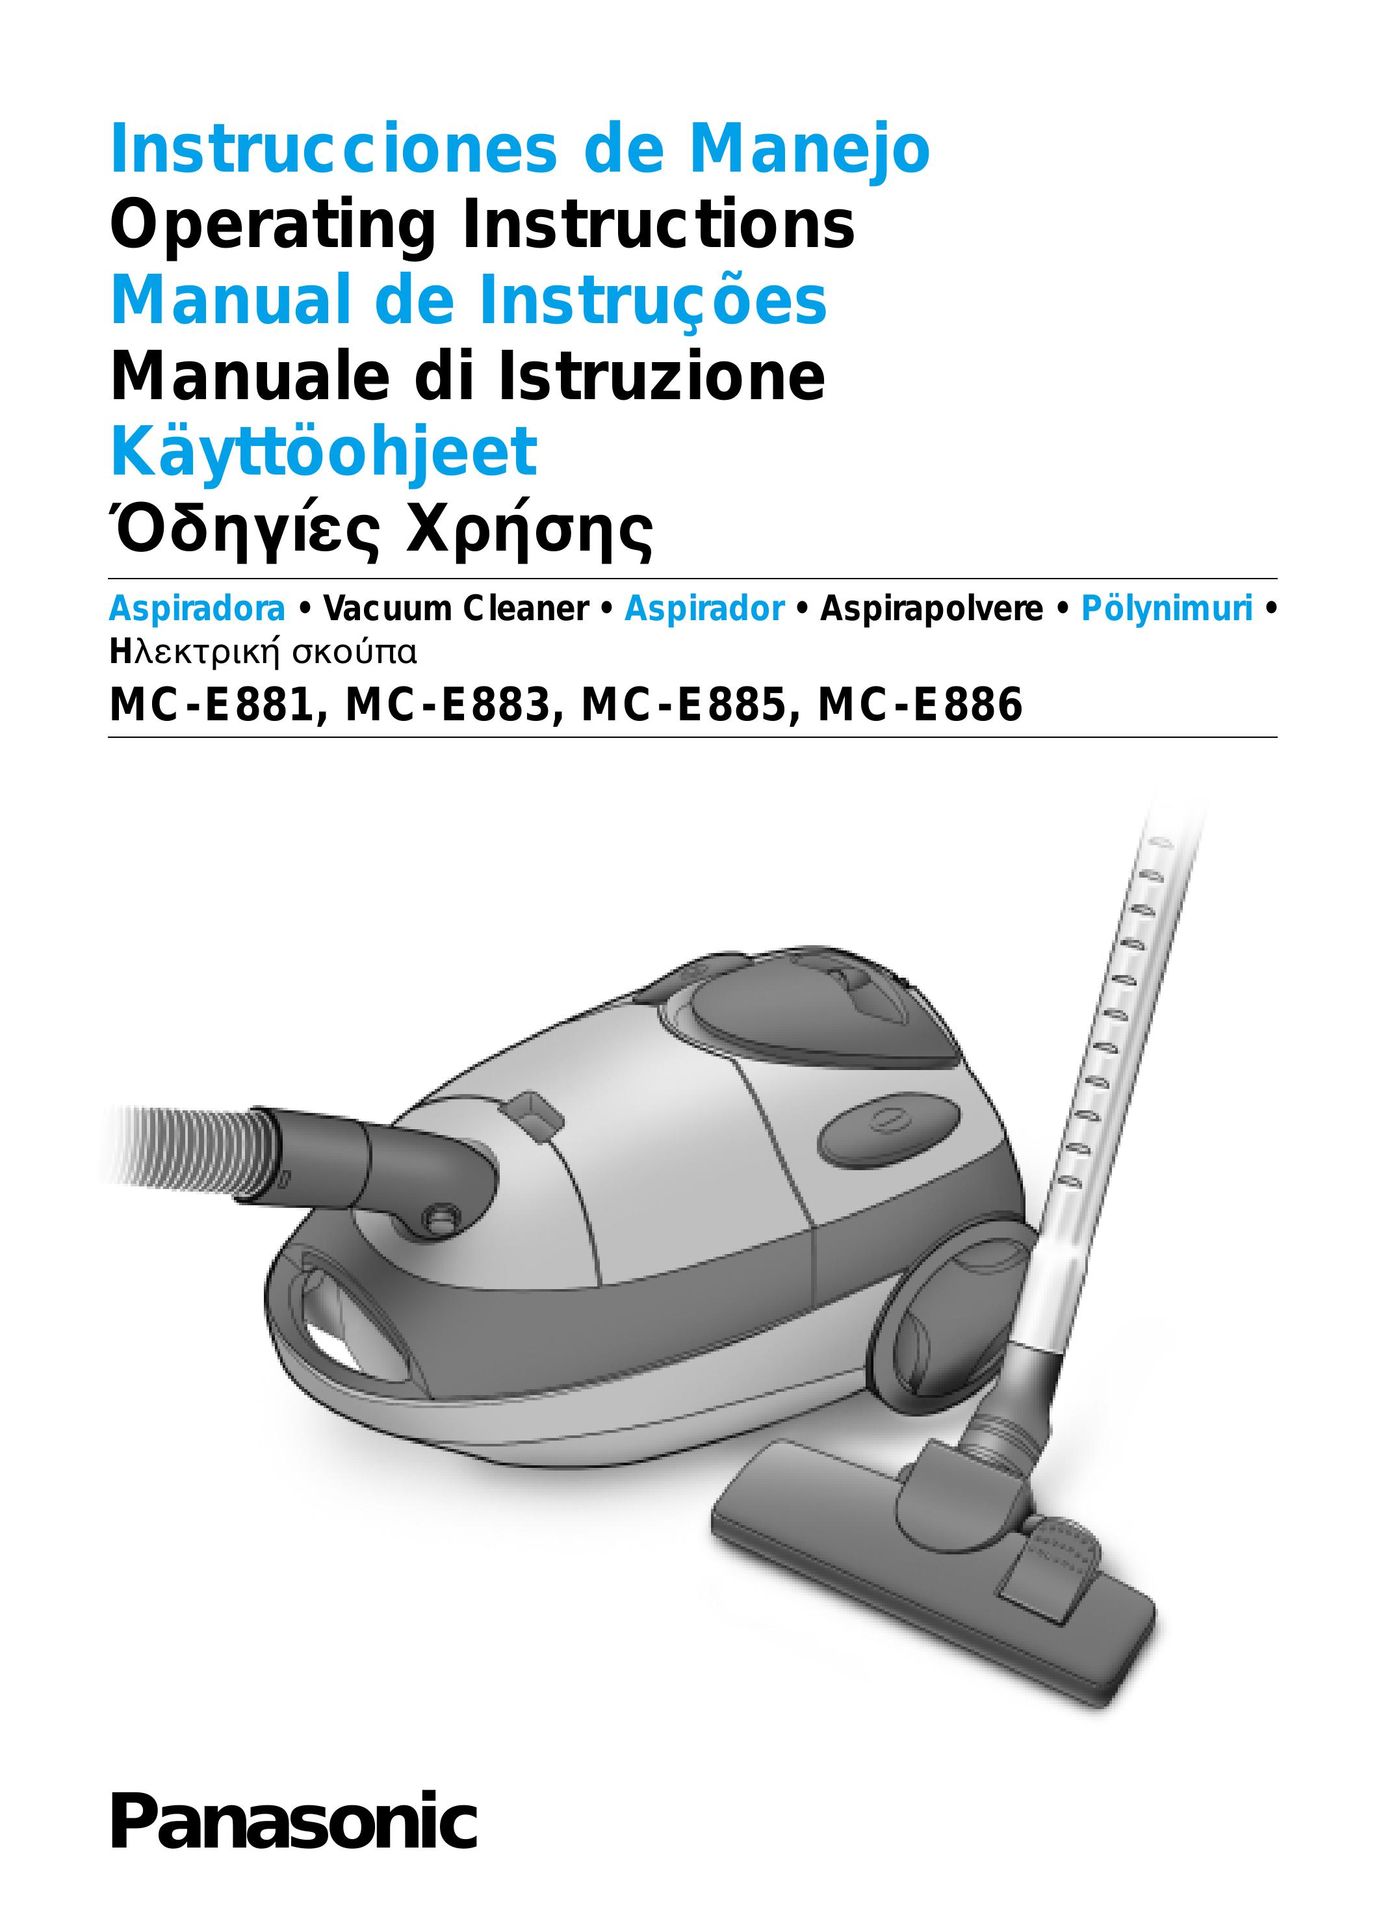 Panasonic MC-E885 Vacuum Cleaner User Manual